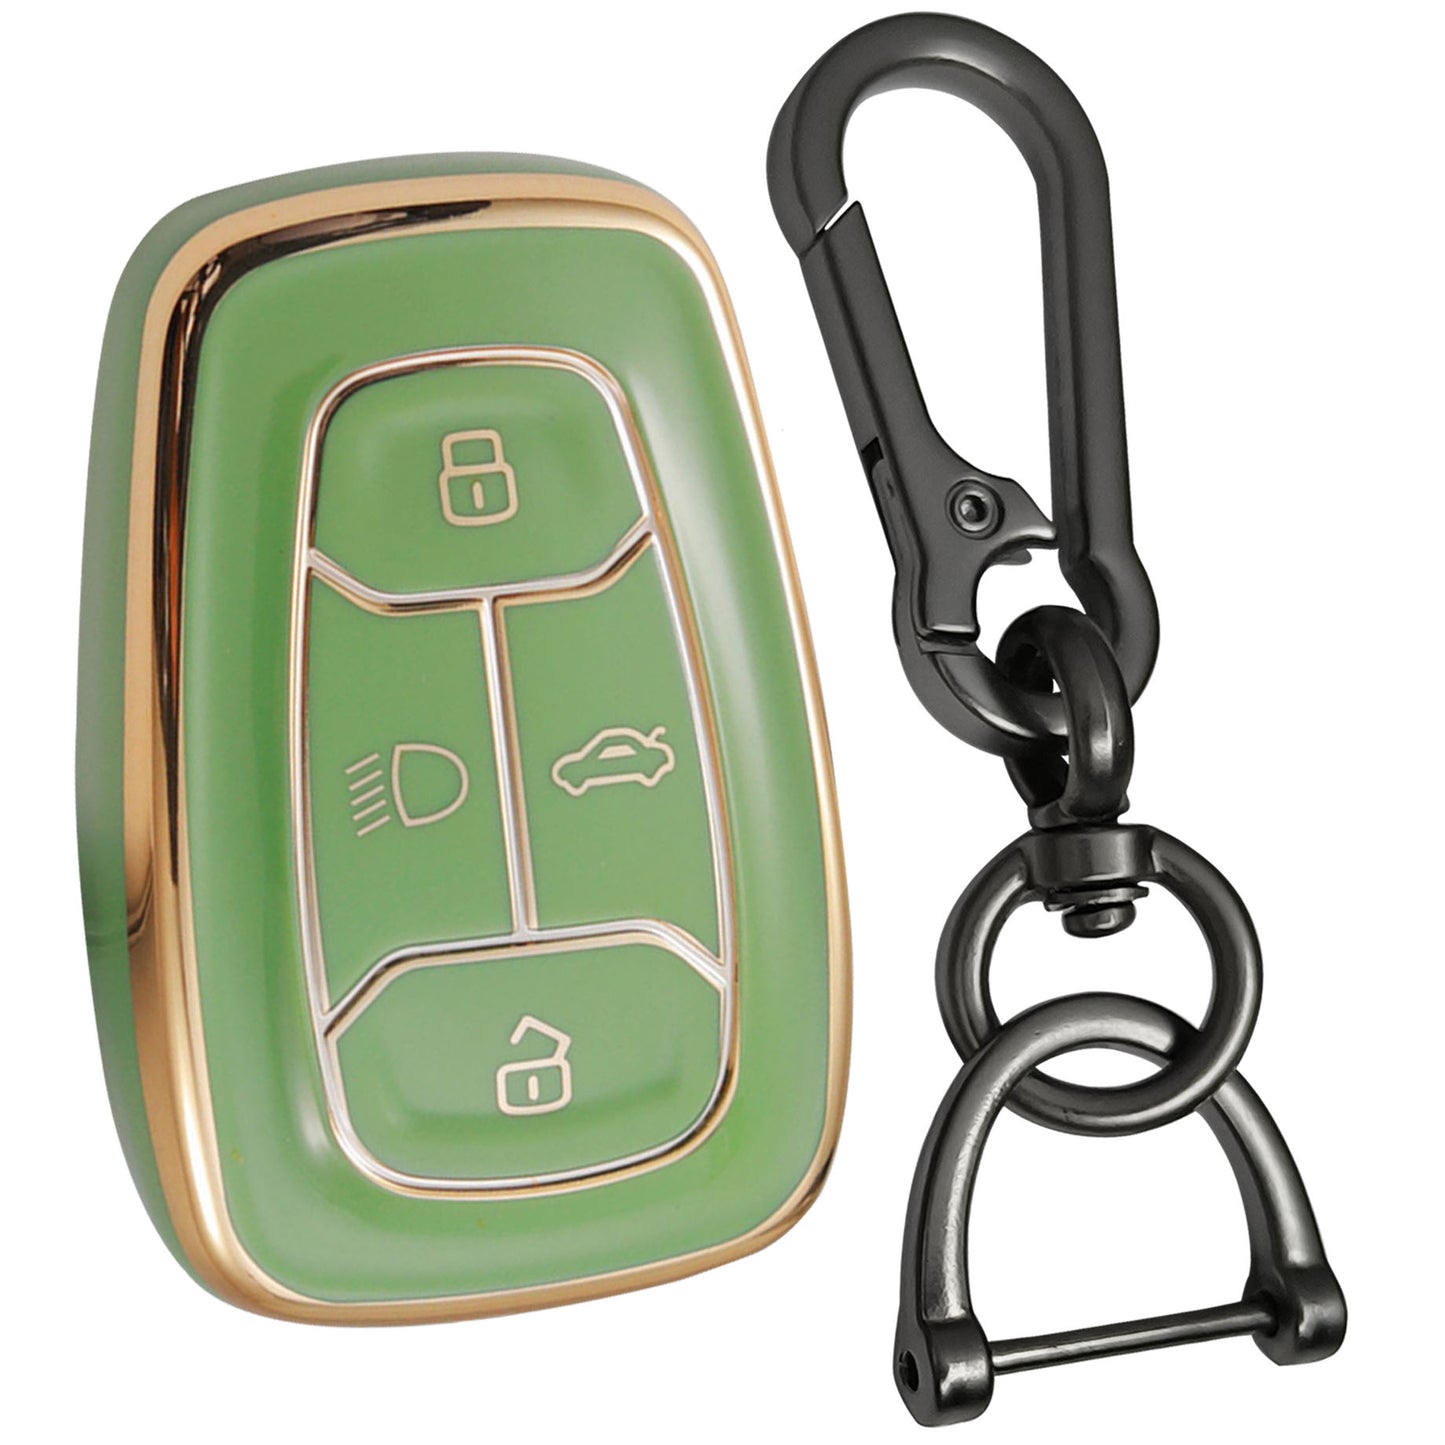 tata nexon harrier safari punch altroz tpu cover green gold car key cover case accessories keychain